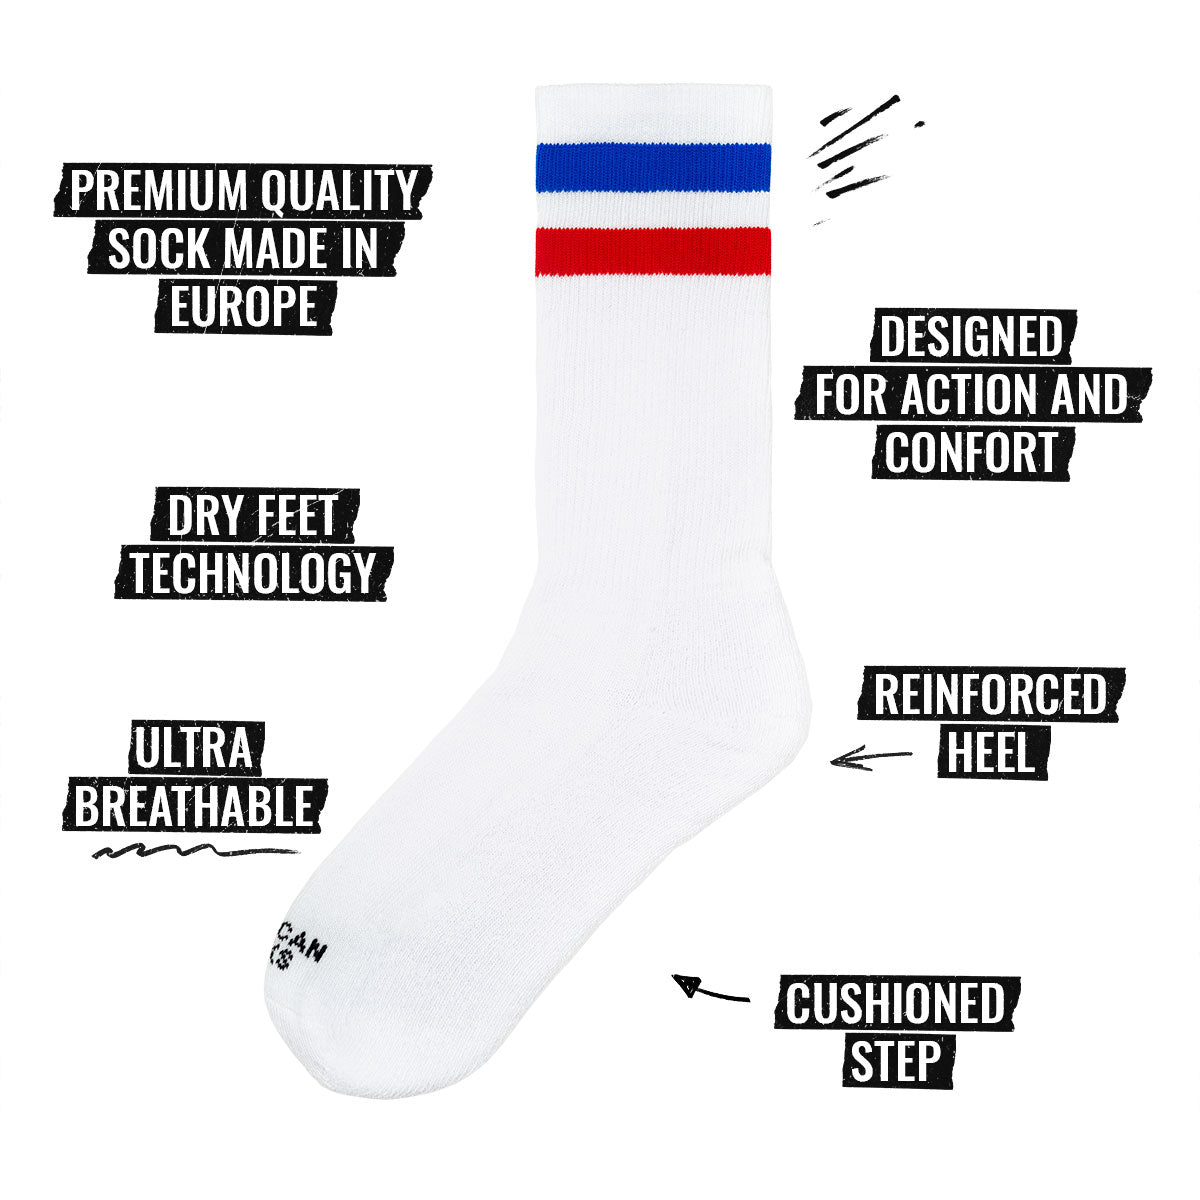 Bild der Spezifikationen der American Socks Mid High Socken